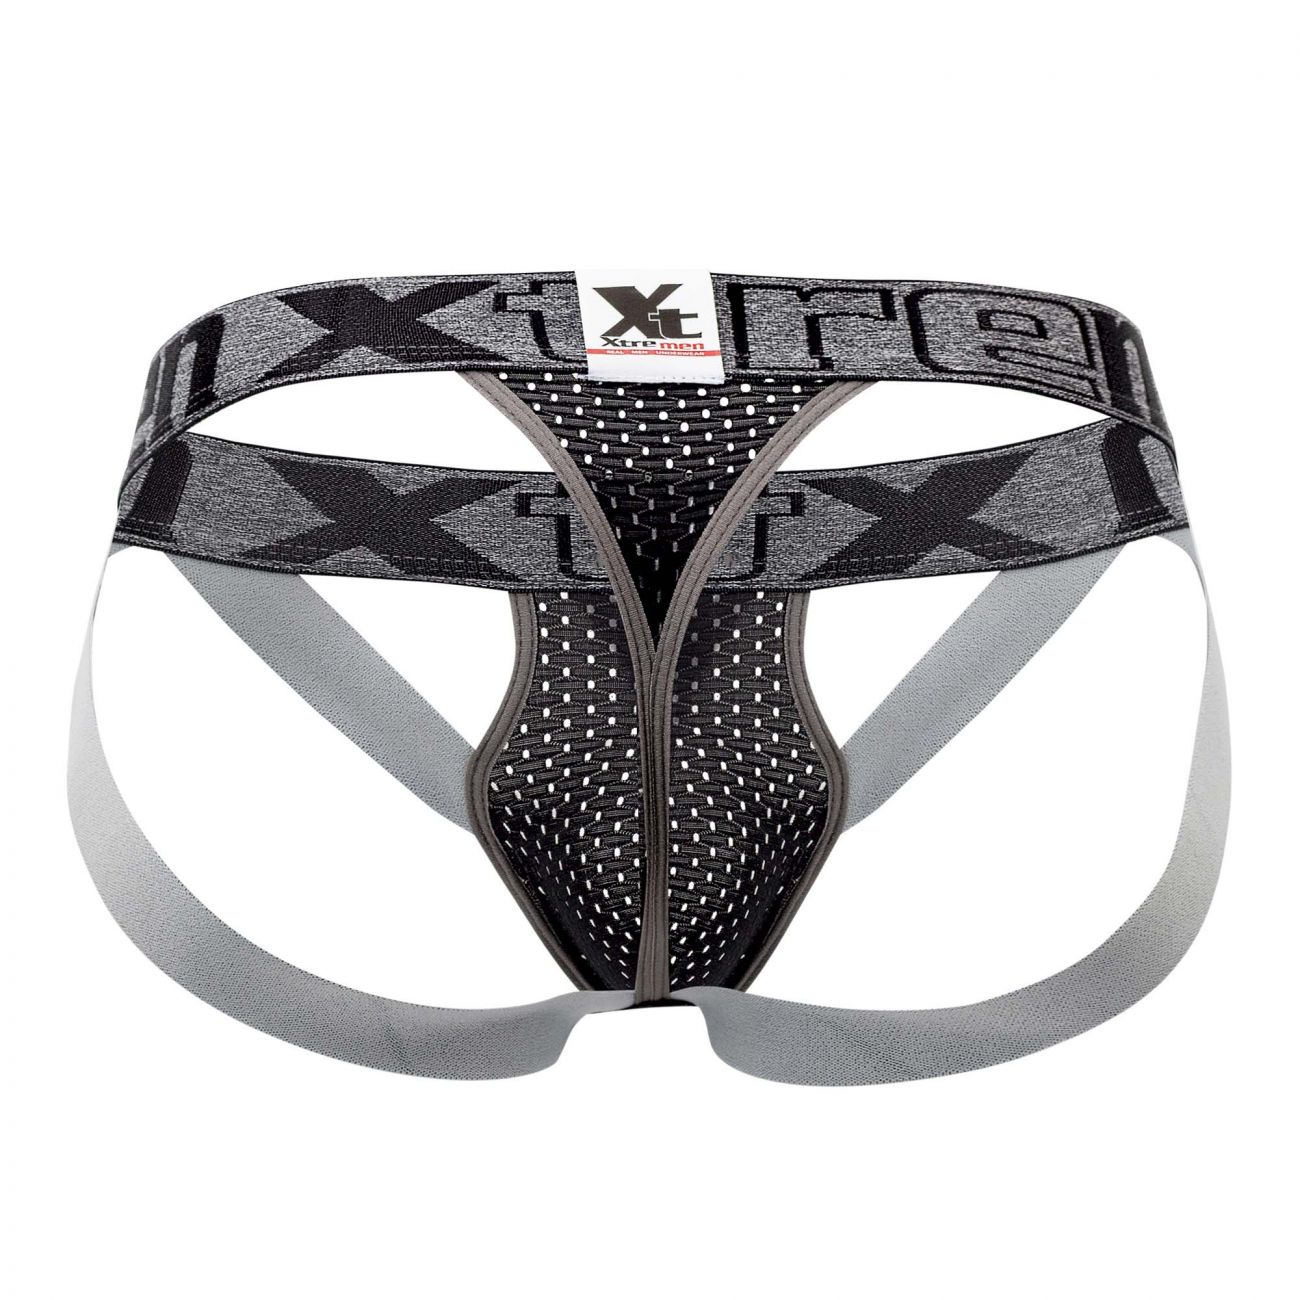 Underwear: Xtremen 91060 Athletic Jockstrap Thongs | eBay